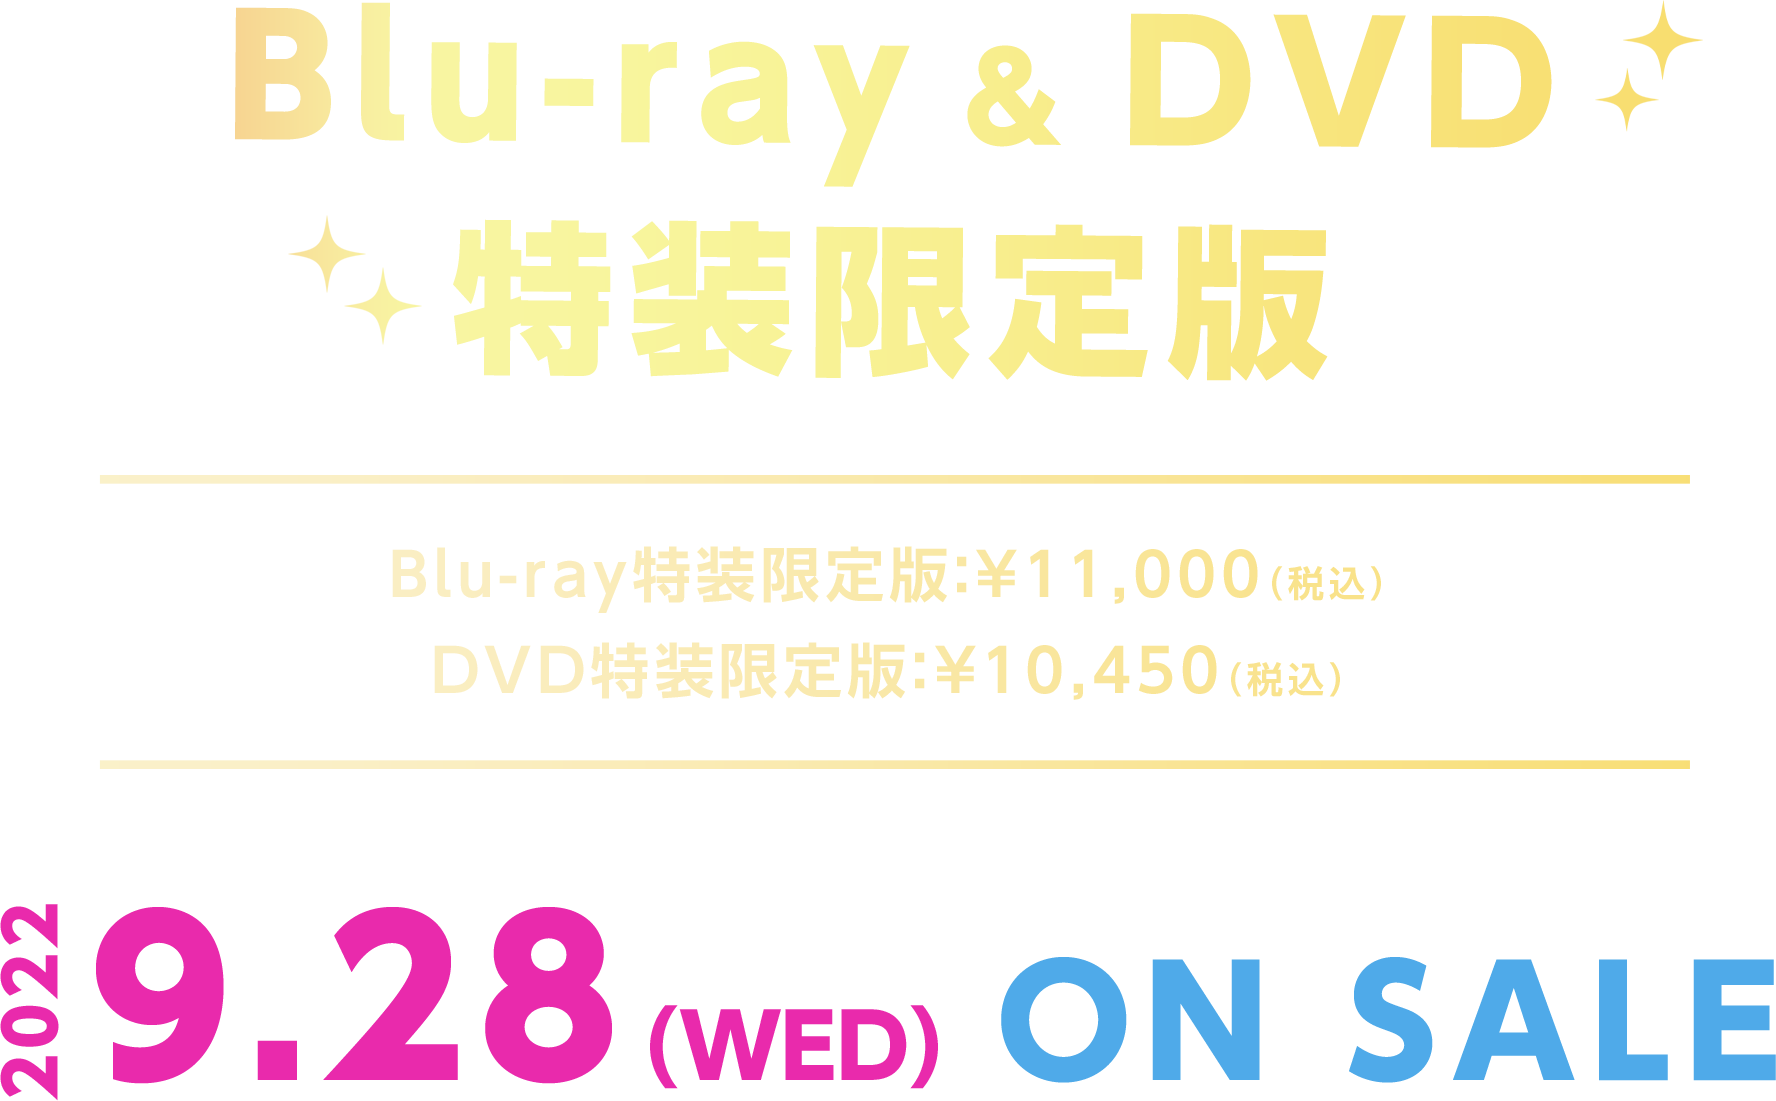 Blu-ray ＆ DVD 特装限定版［Blu-ray特装限定版：¥11,000（税込）／DVD特装限定版：¥10,450（税込）］2022.9.28（WED）ON SALE